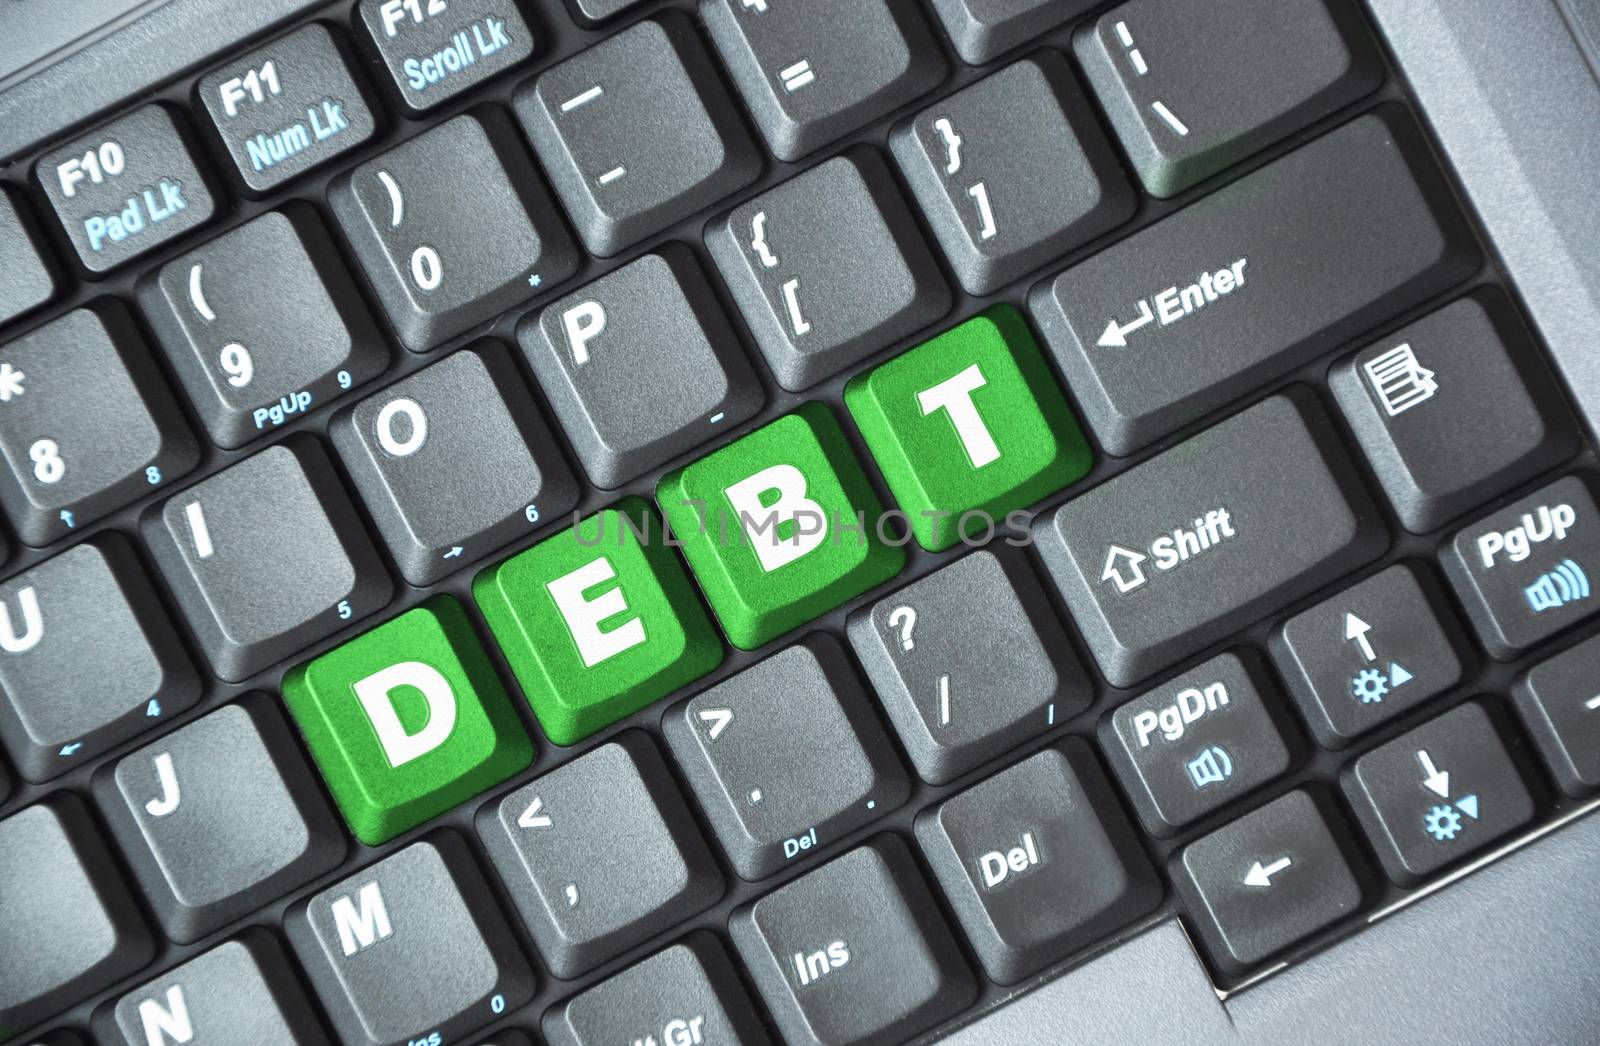 Green debt key on keyboard